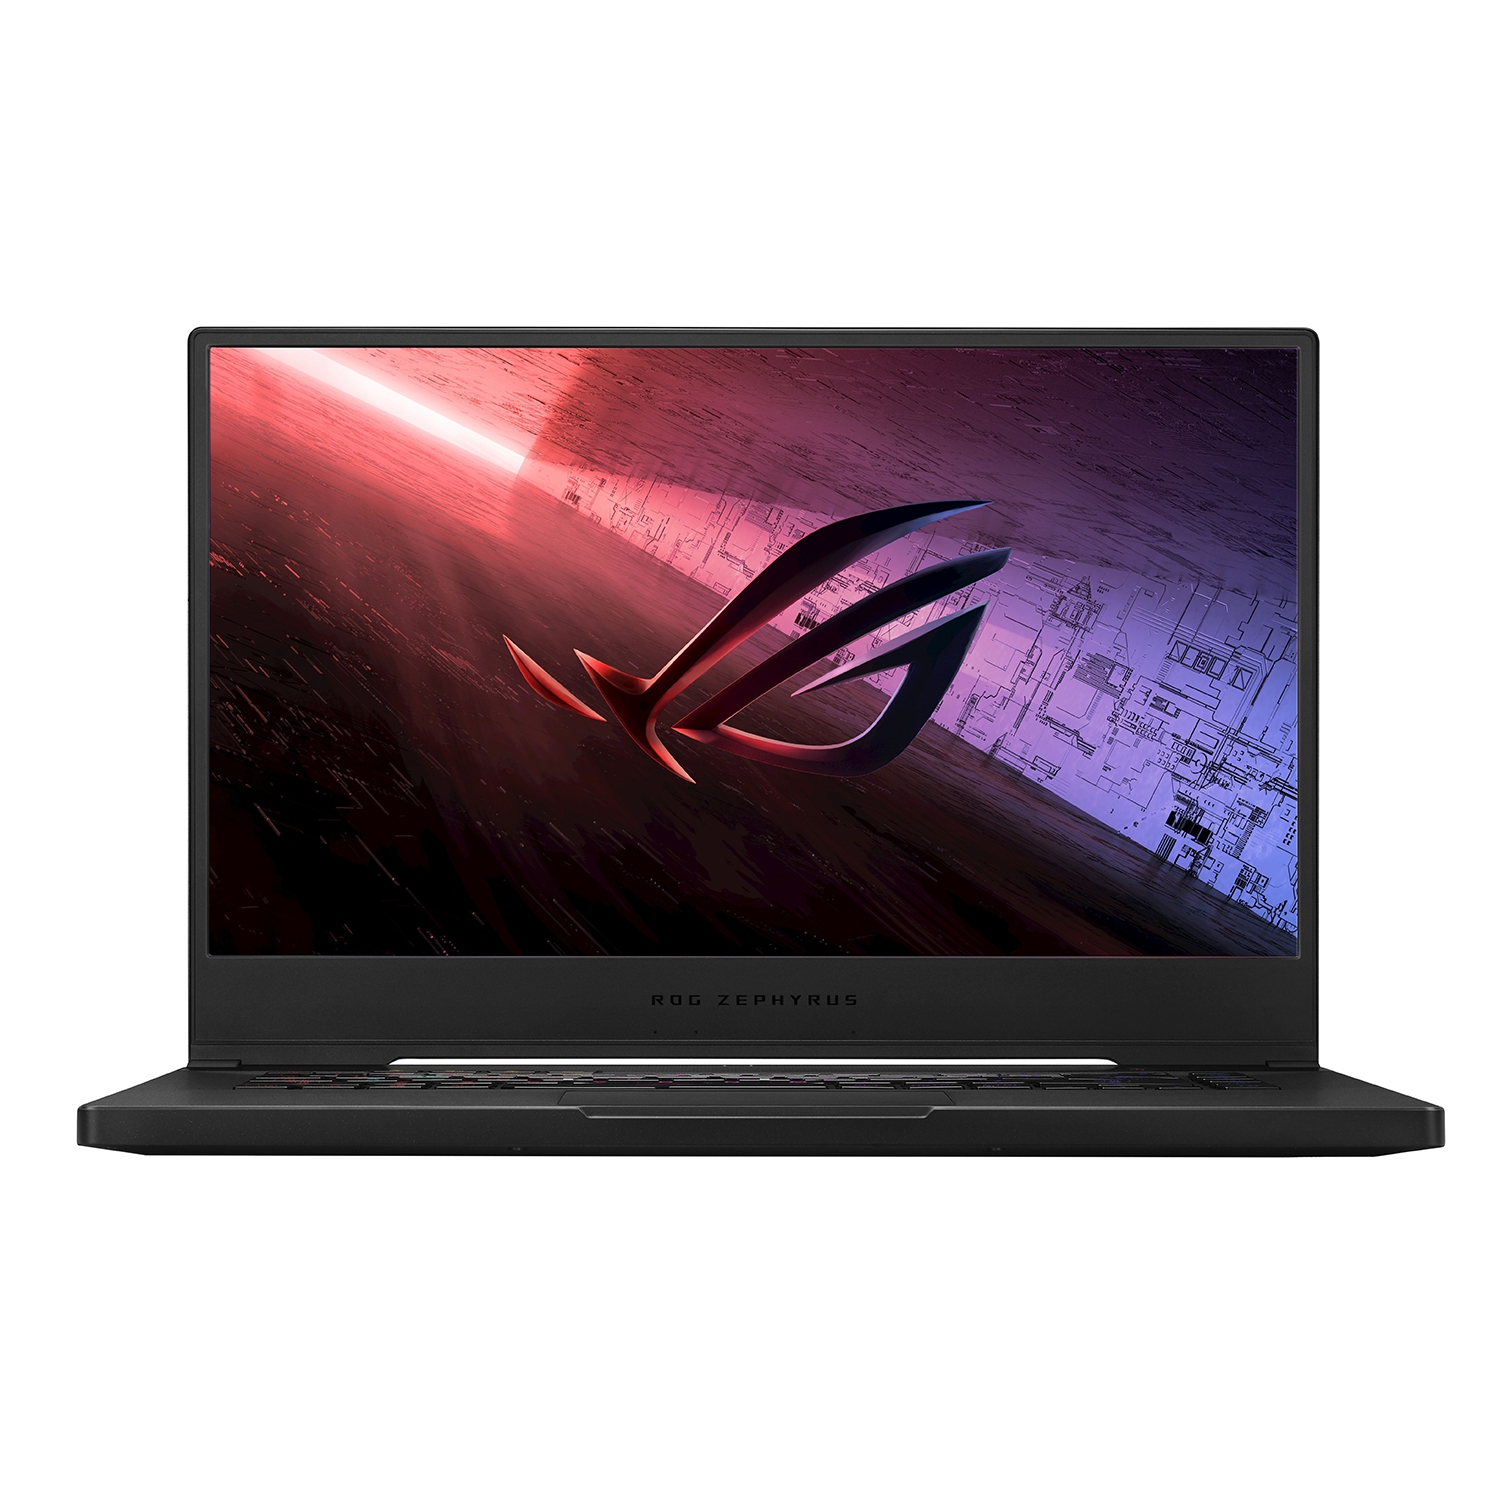 Custom ASUS ROG Zephyrus S15 Laptop (Intel i7-10875H, 32GB RAM, 1TB SSD, NVIDIA RTX 2080 SUPER, Win 10 Pro)